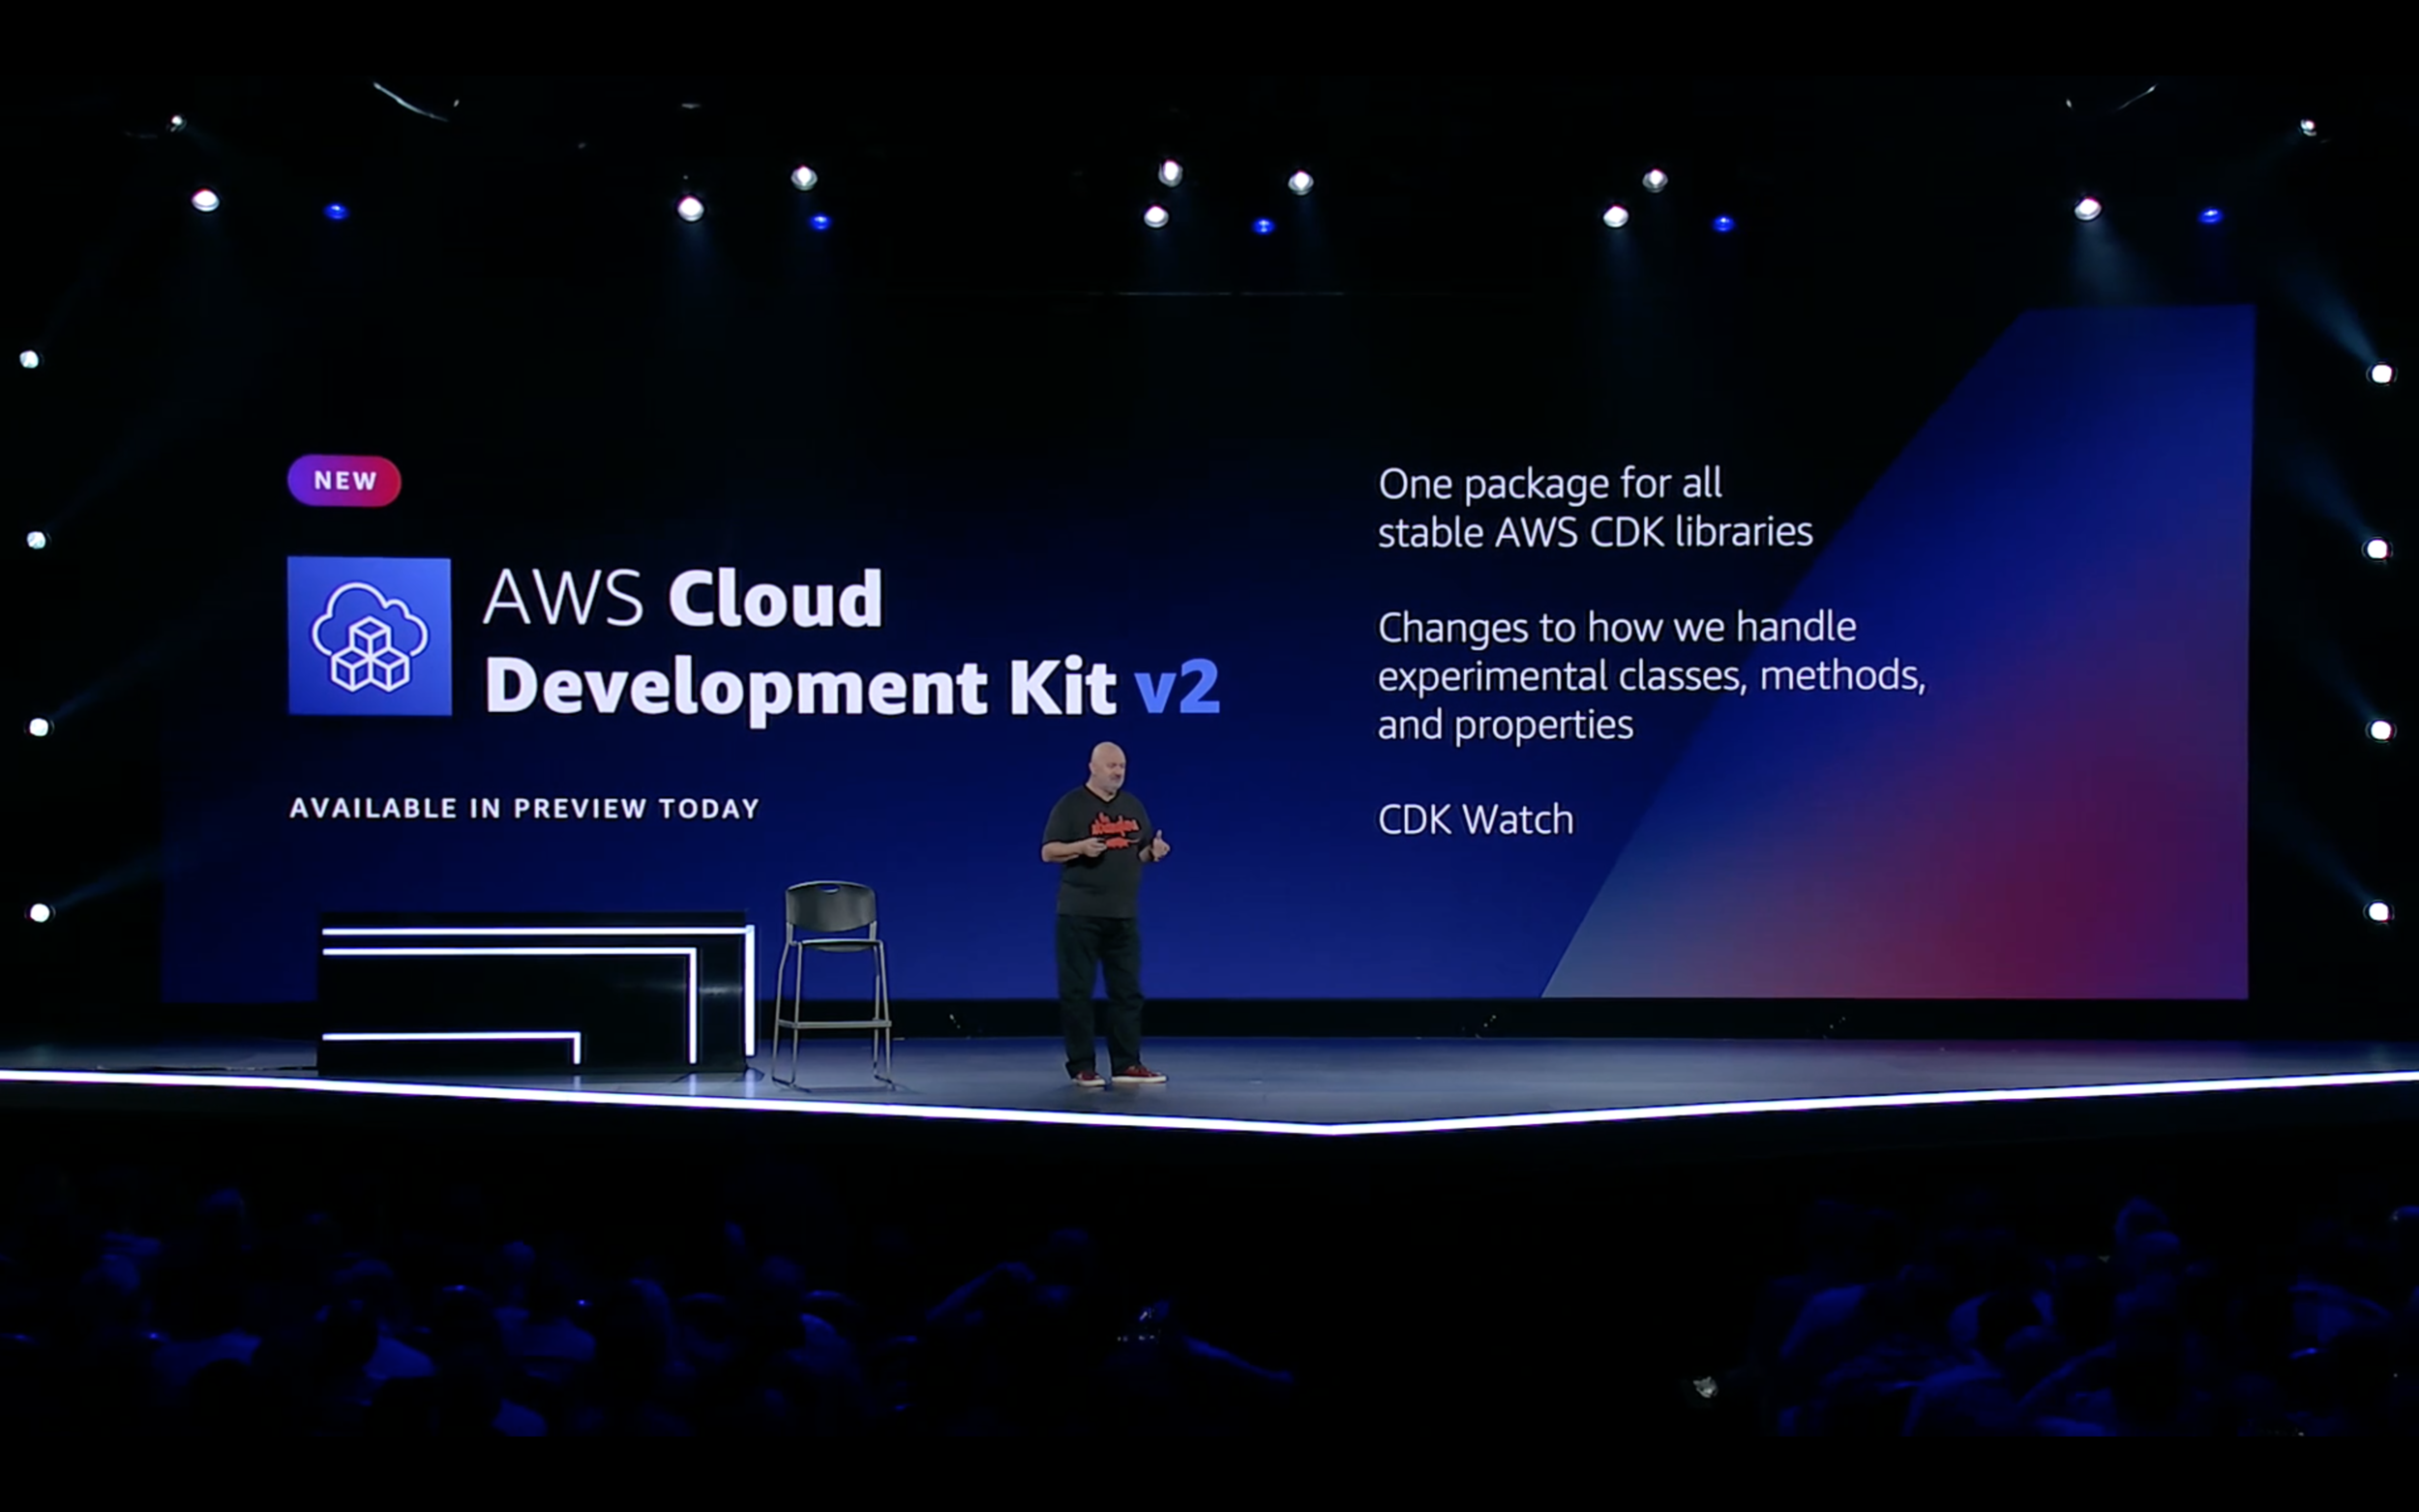 AWS Cloud Development Kit v2